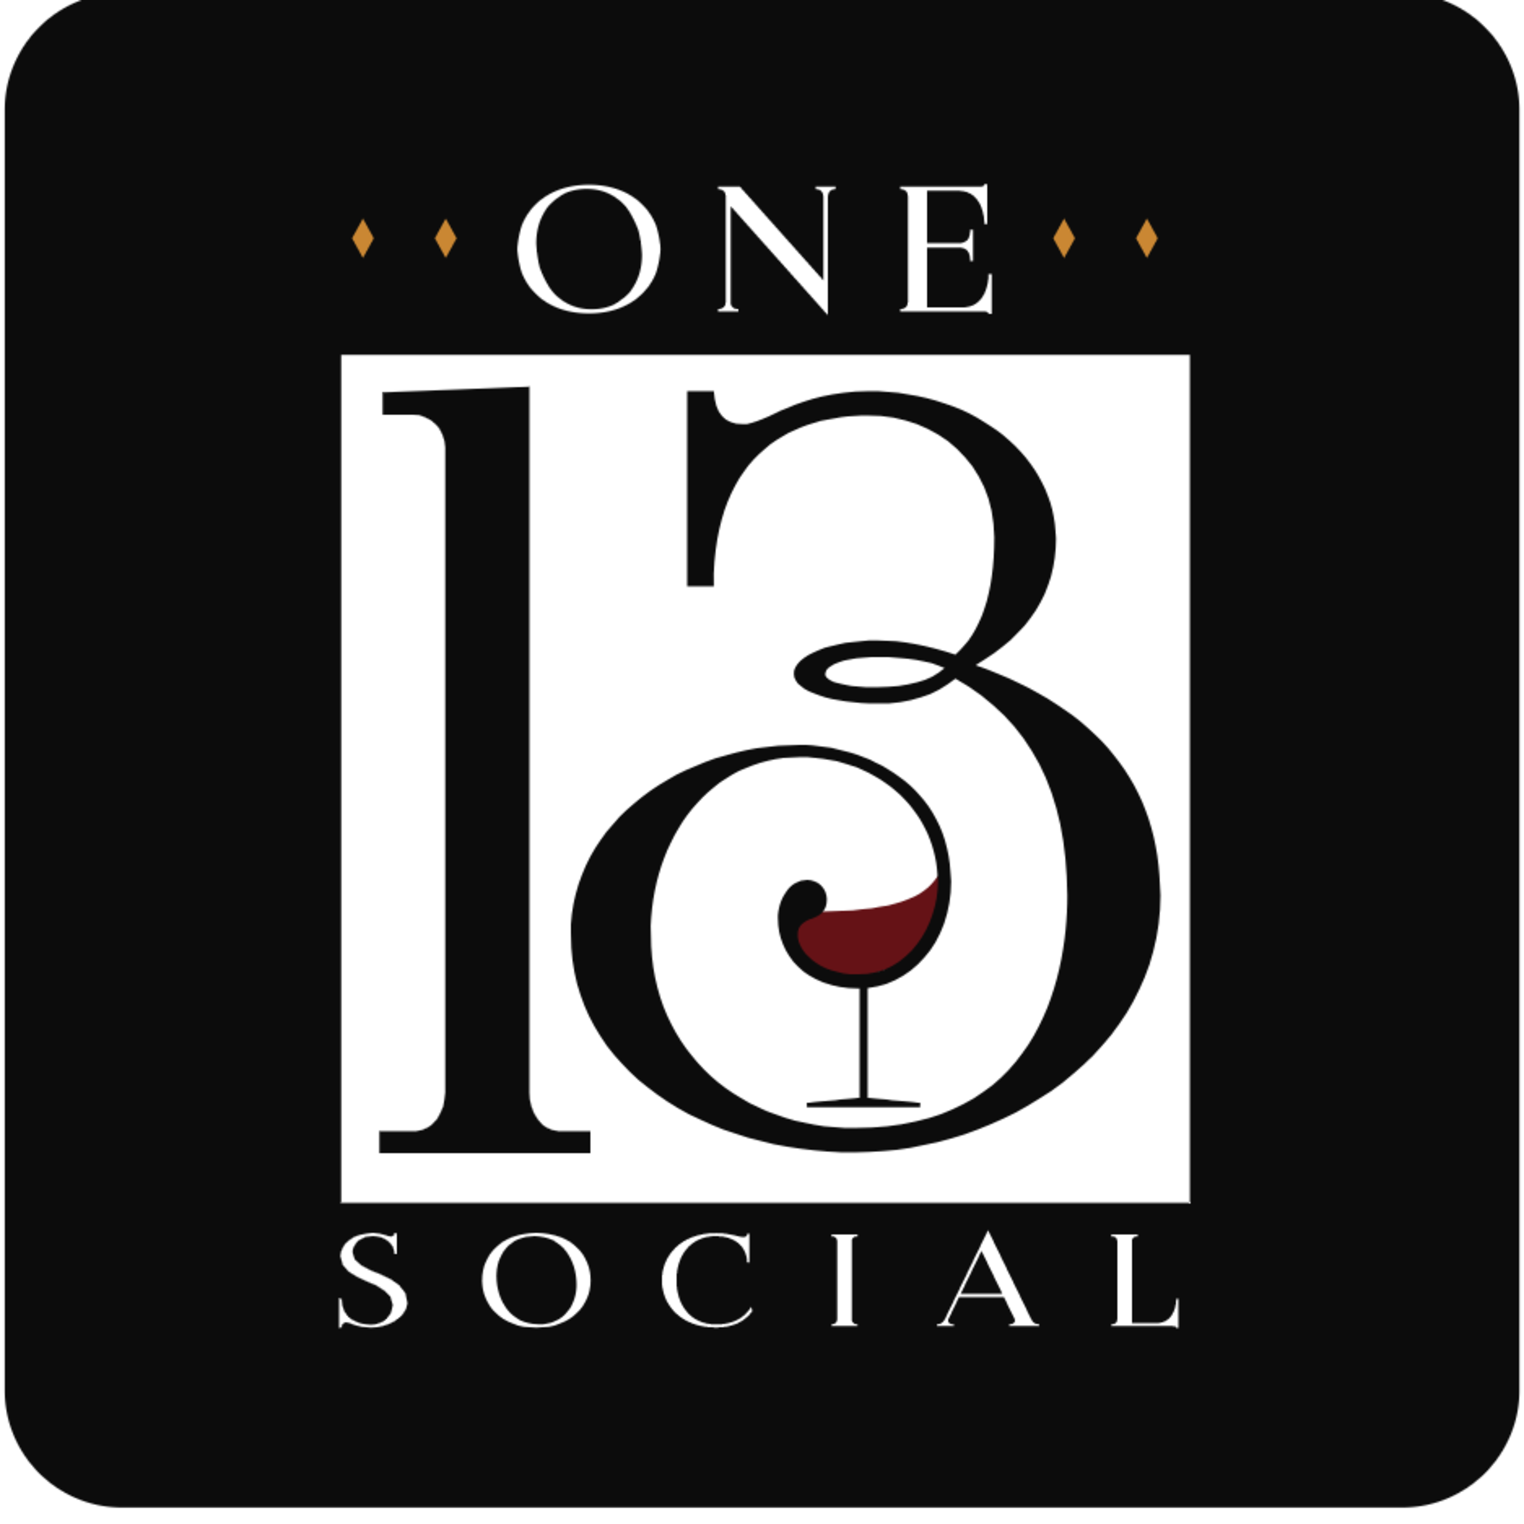 One13 Social